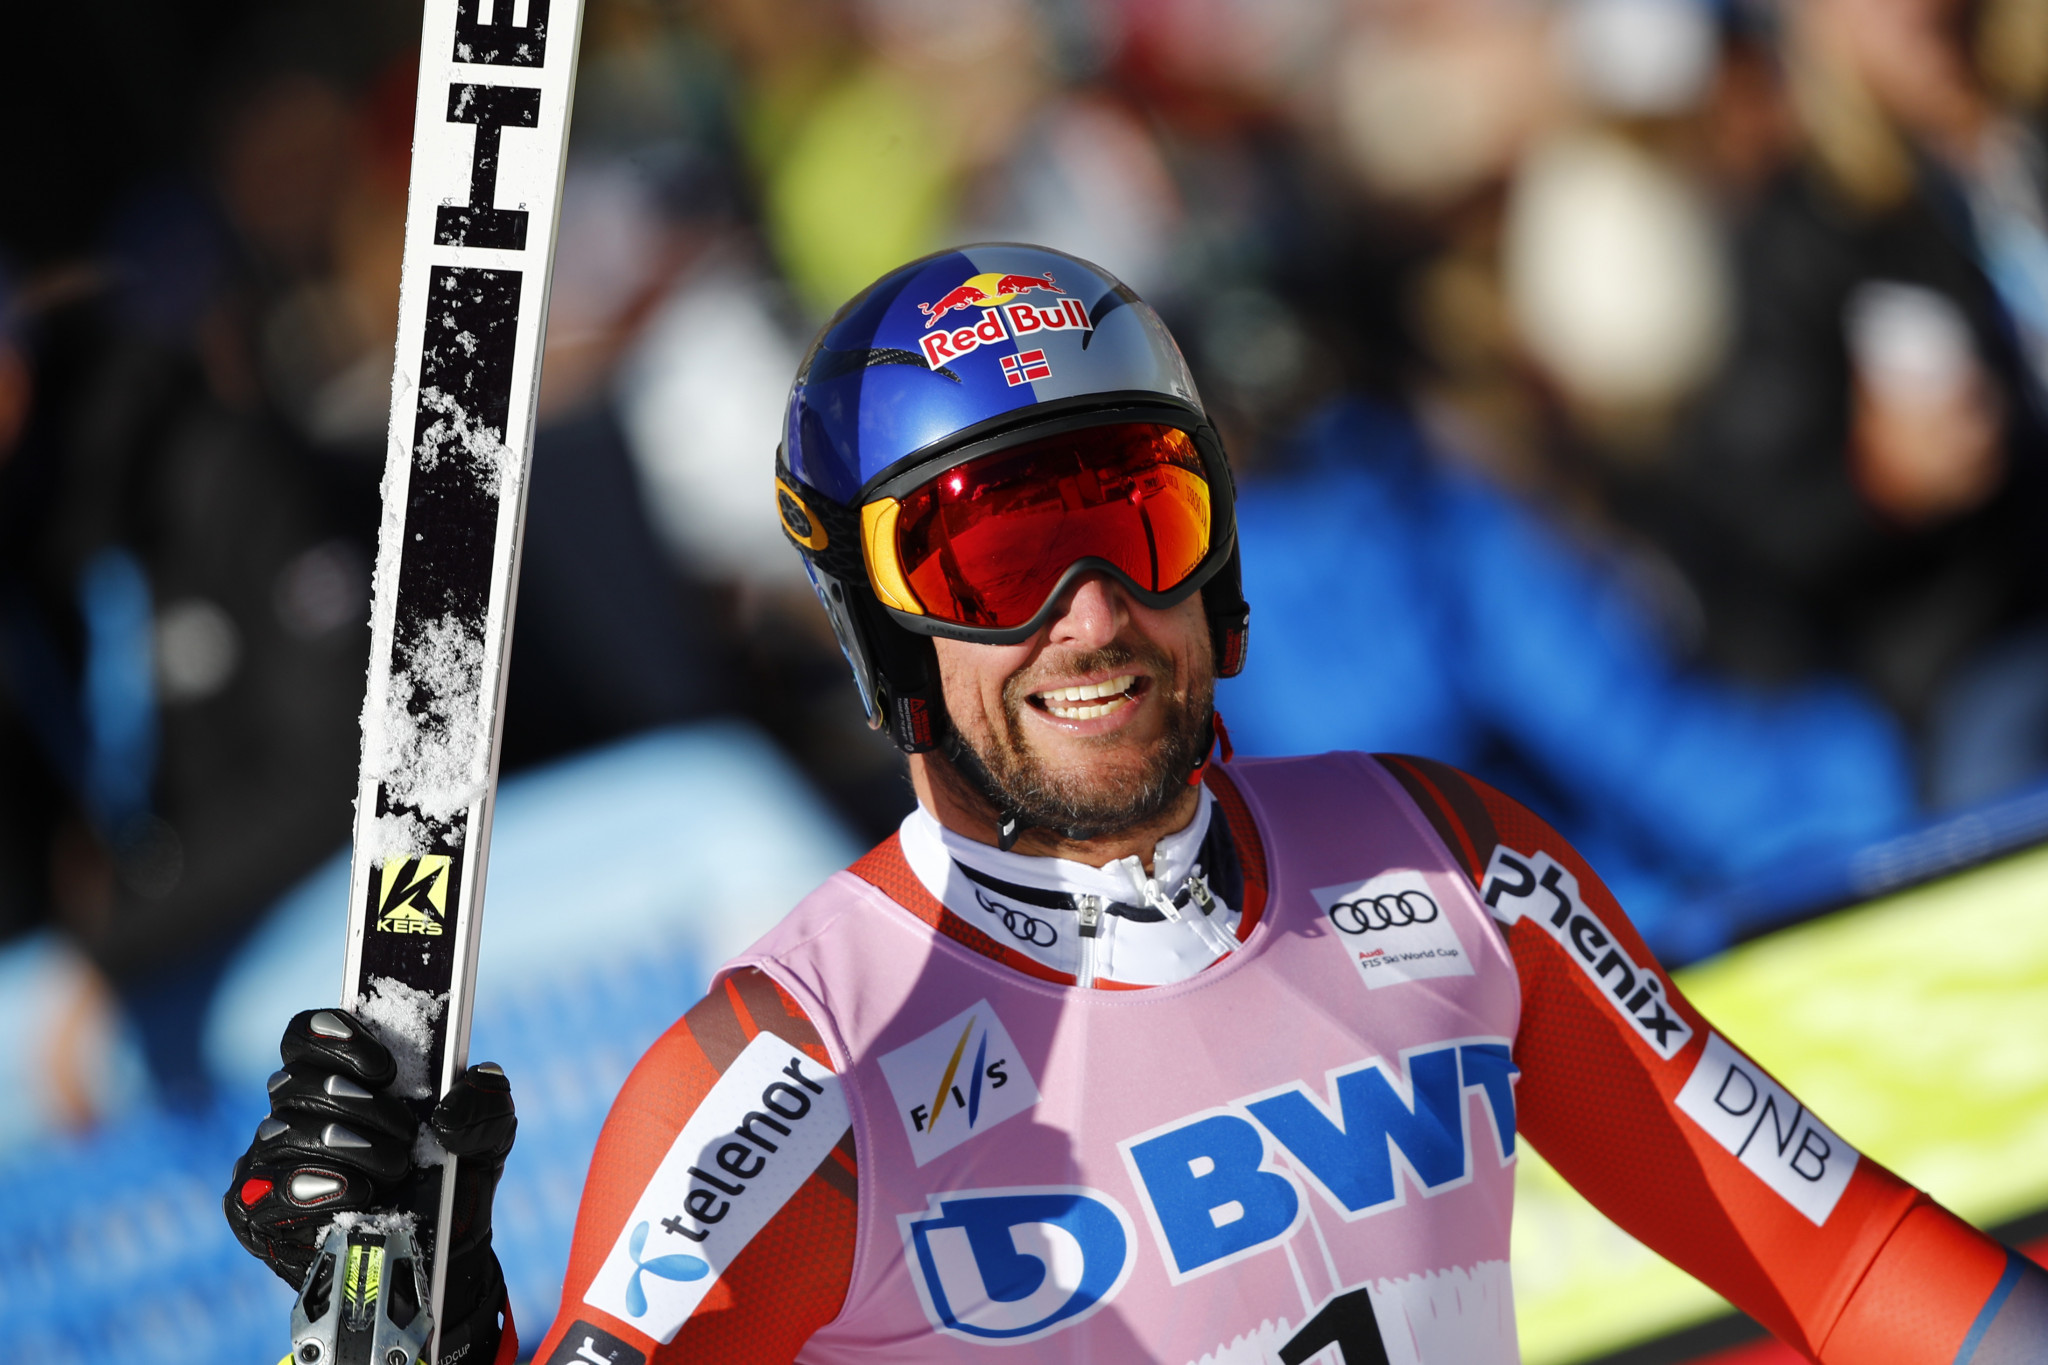 Svindal tops men's downhill podium at FIS Alpine Skiing World Cup in Beaver Creek